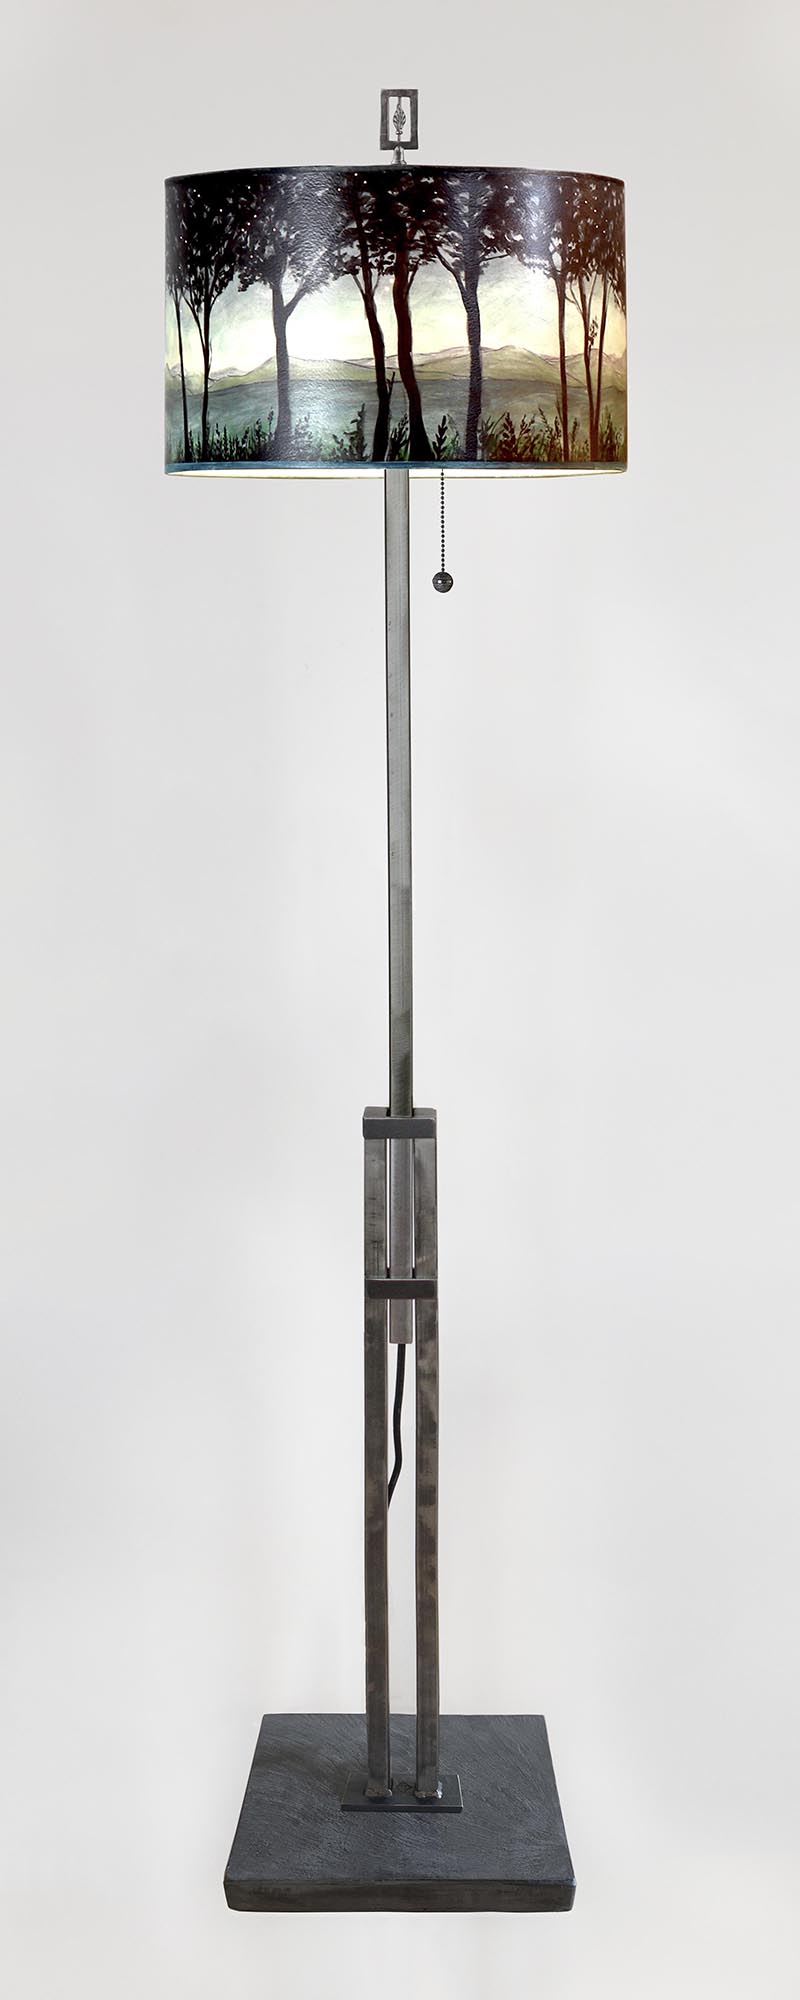 Adjustable-Height Steel Floor Lamp with Large Drum Shade in Twilight